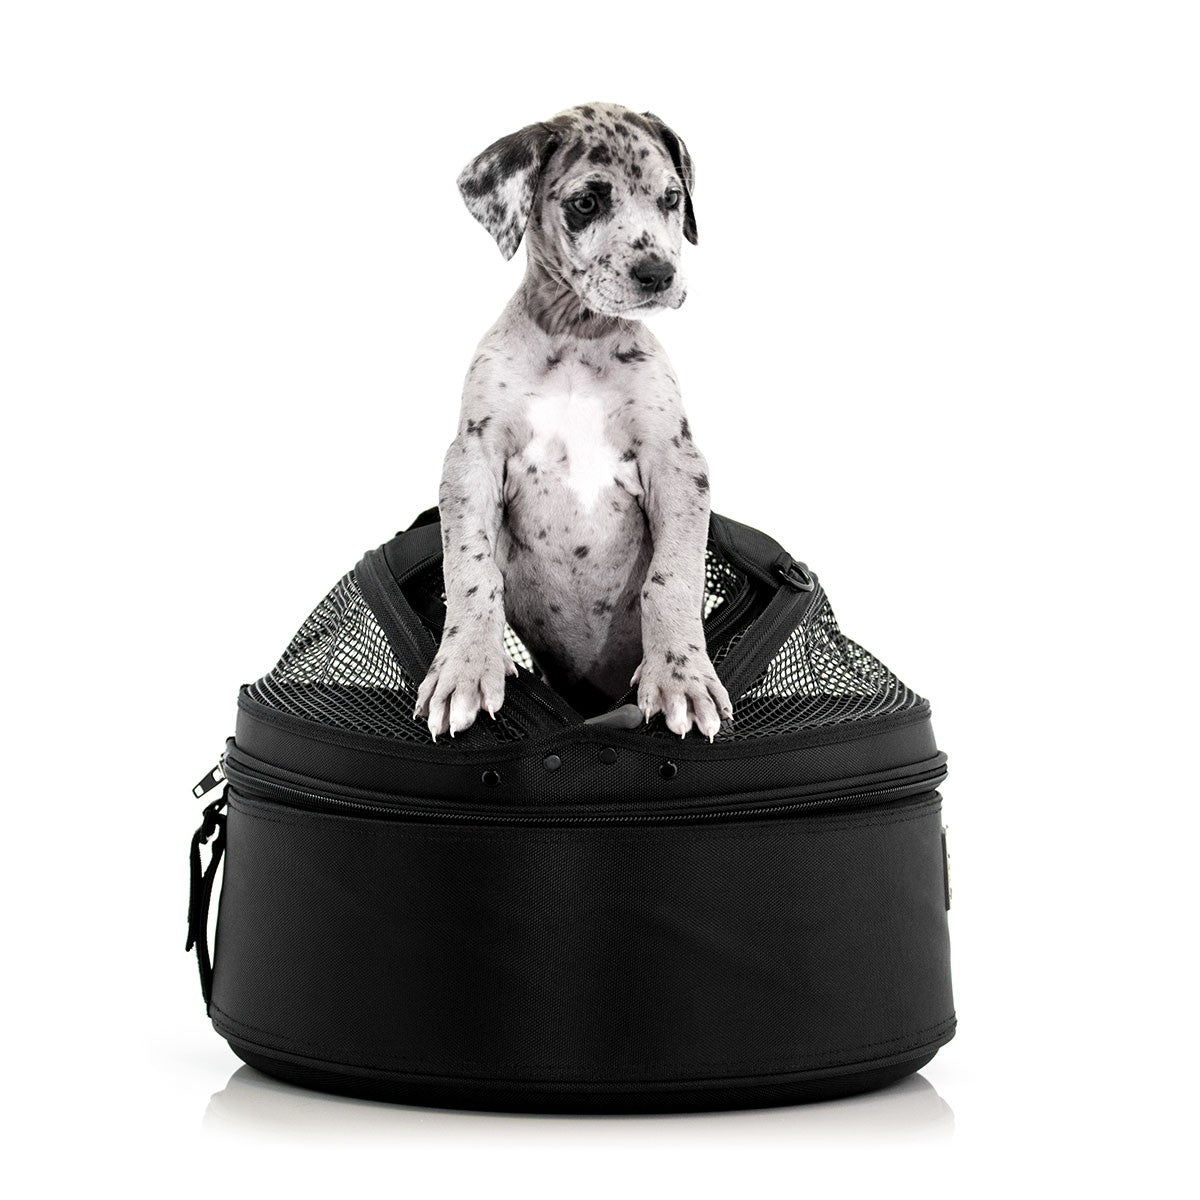 Pet Carrier - Black SleepyPod Dog Carrier